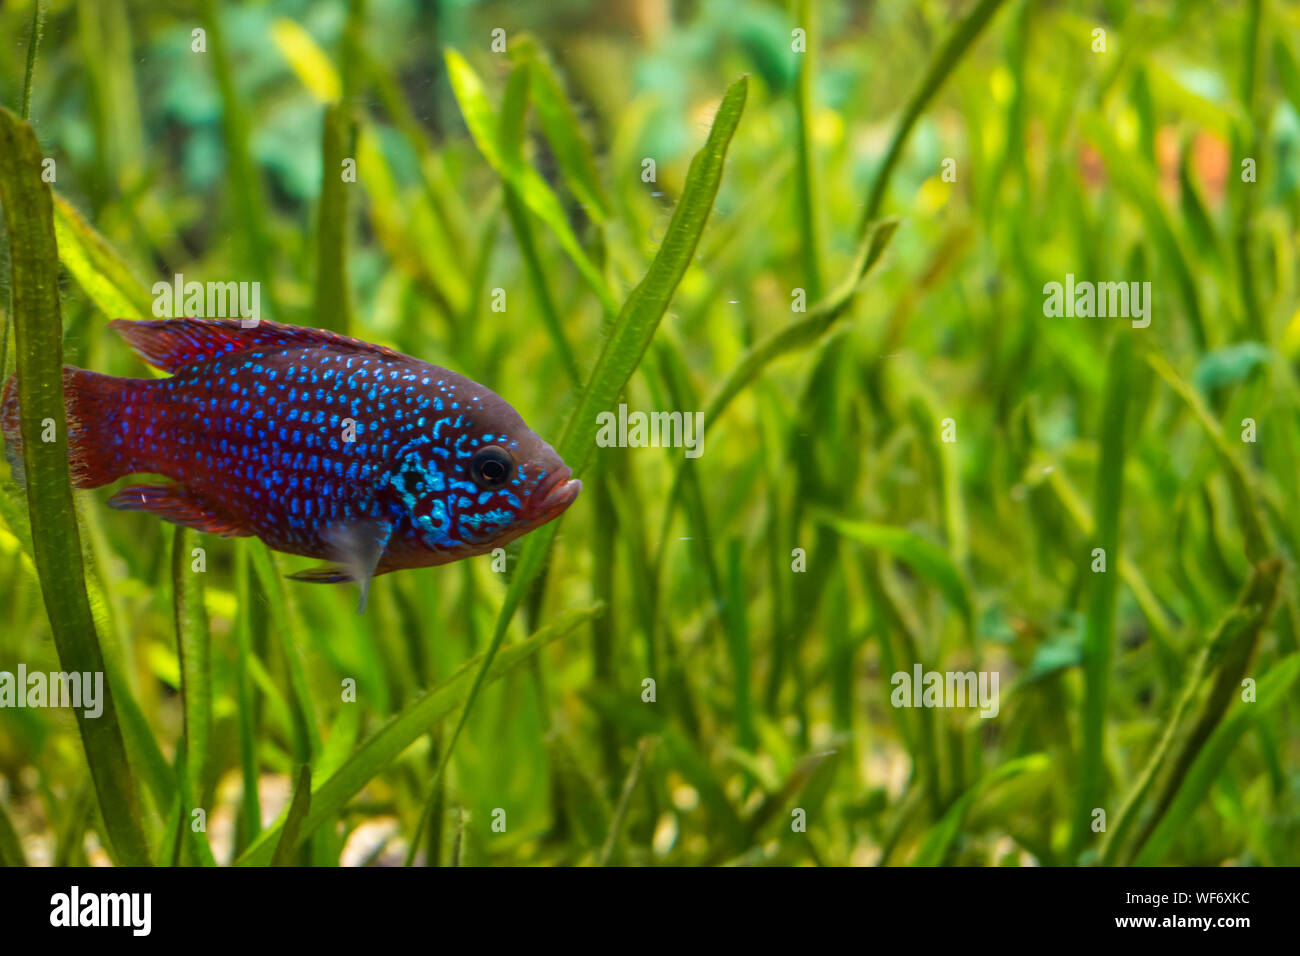 View of Hemichromis Letourneuxi fish inside an aquarium. Stock Photo